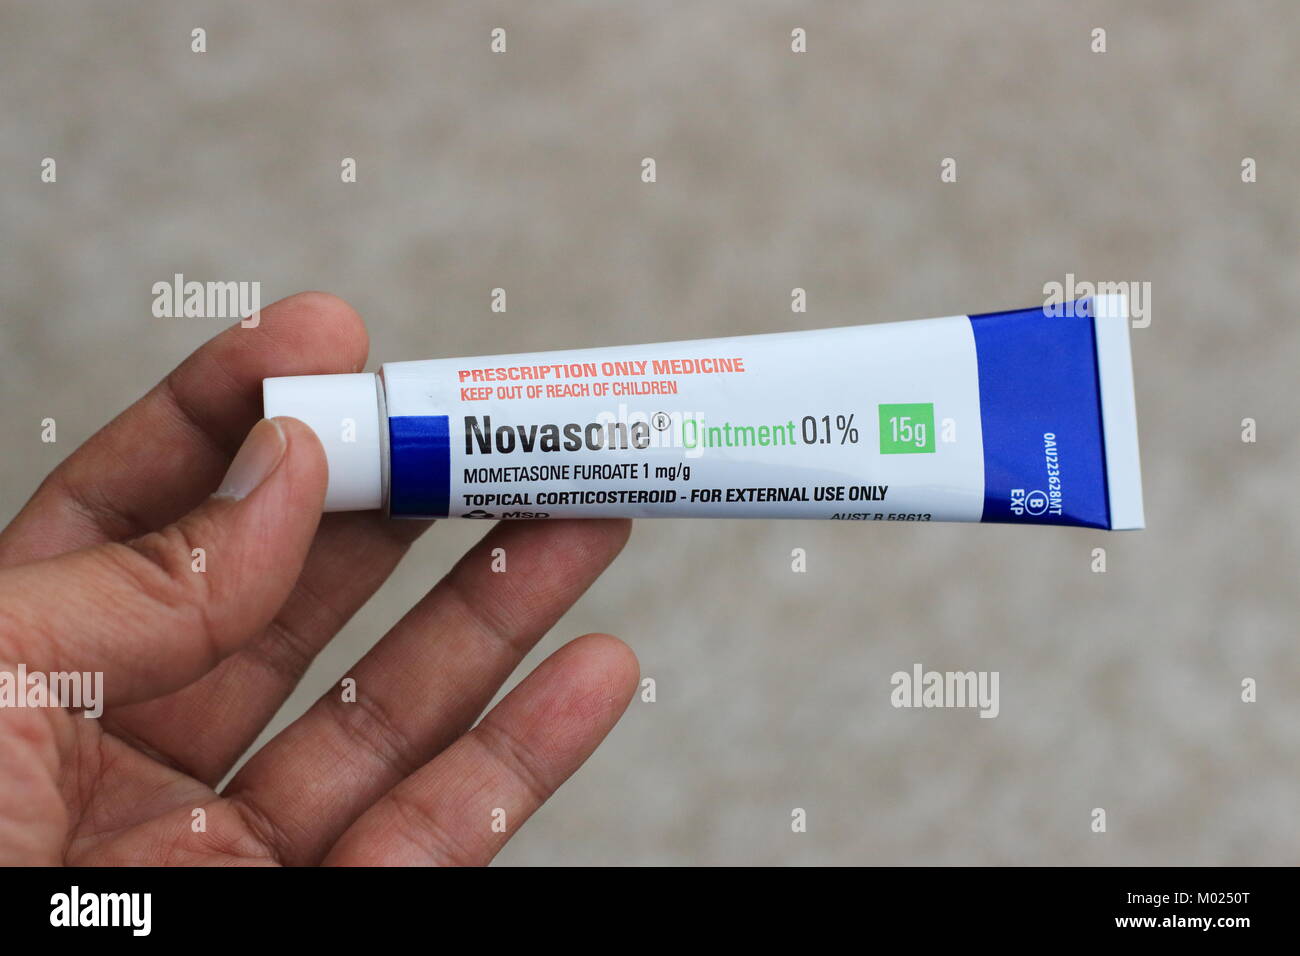 Novasone Ointment isolated Stock Photo